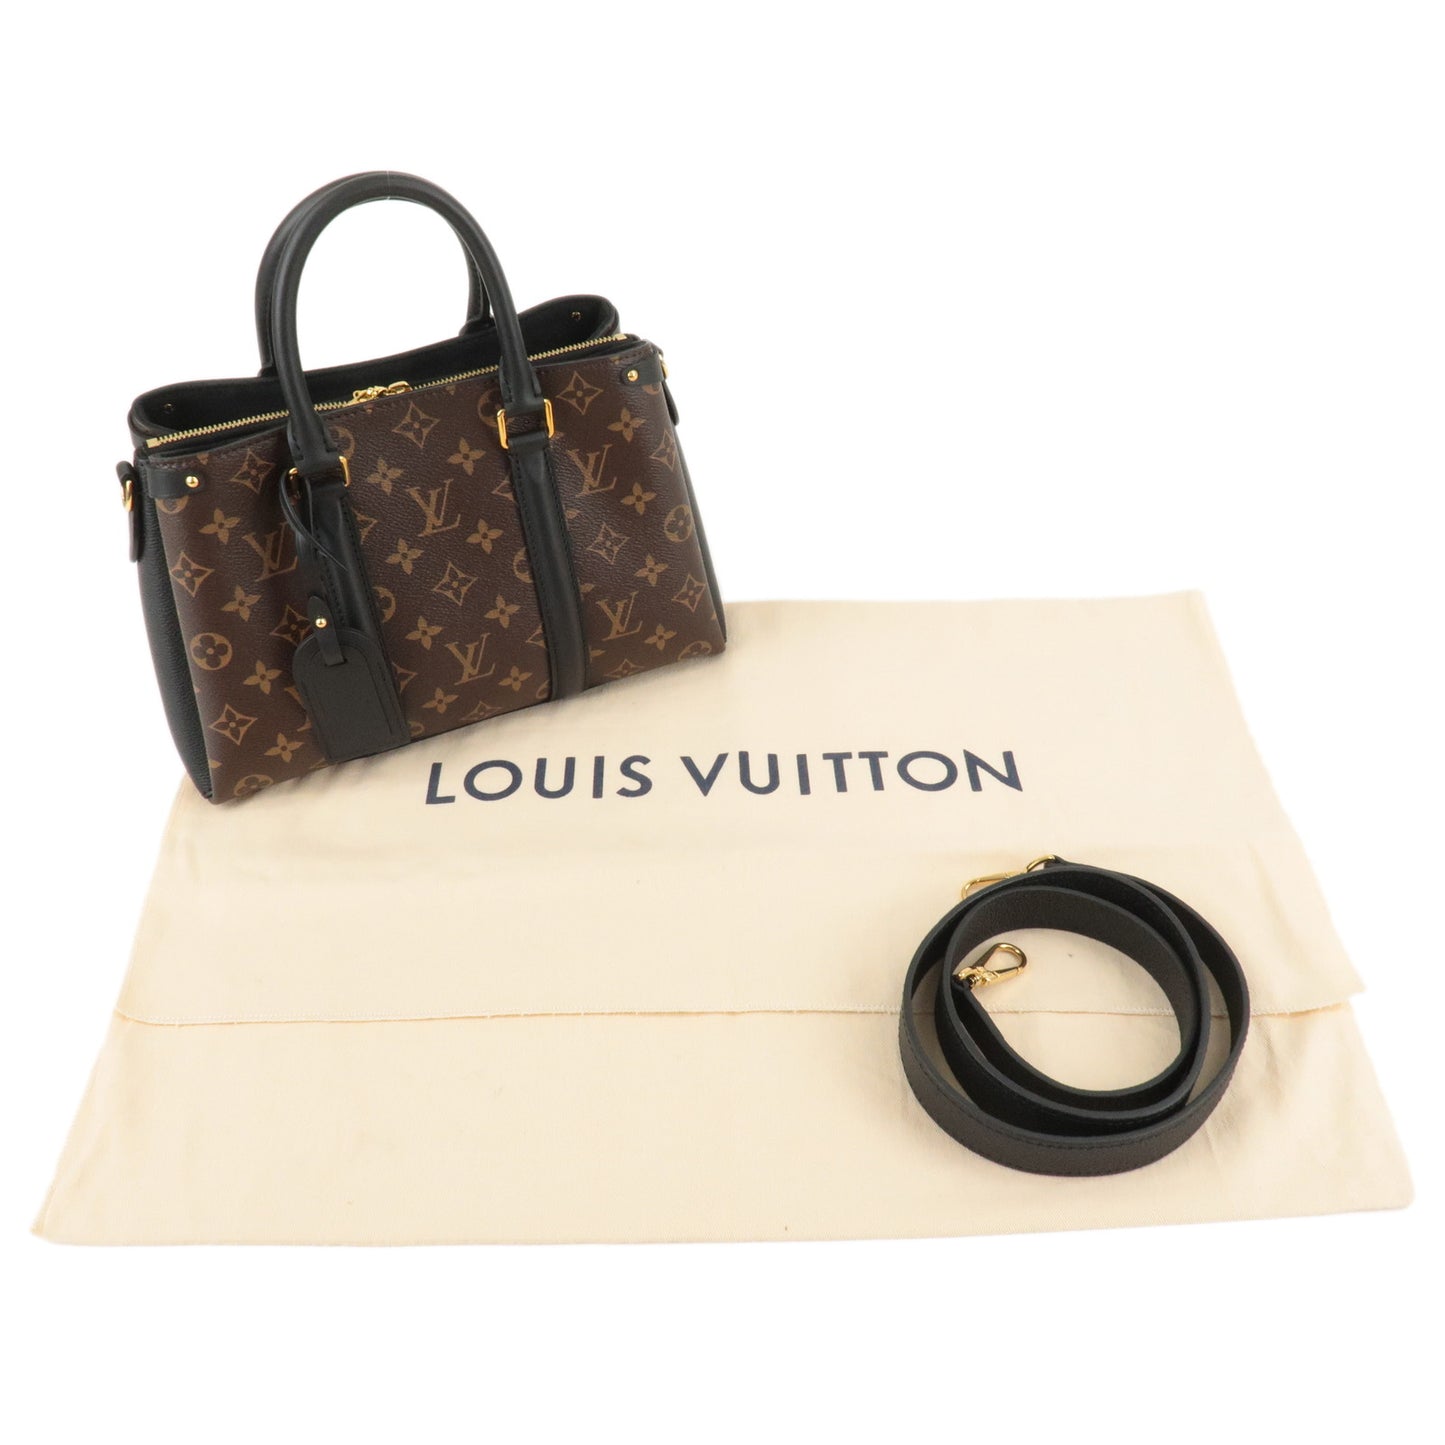 Louis Vuitton Soufflot Bb (M44899, M44898, M44818)